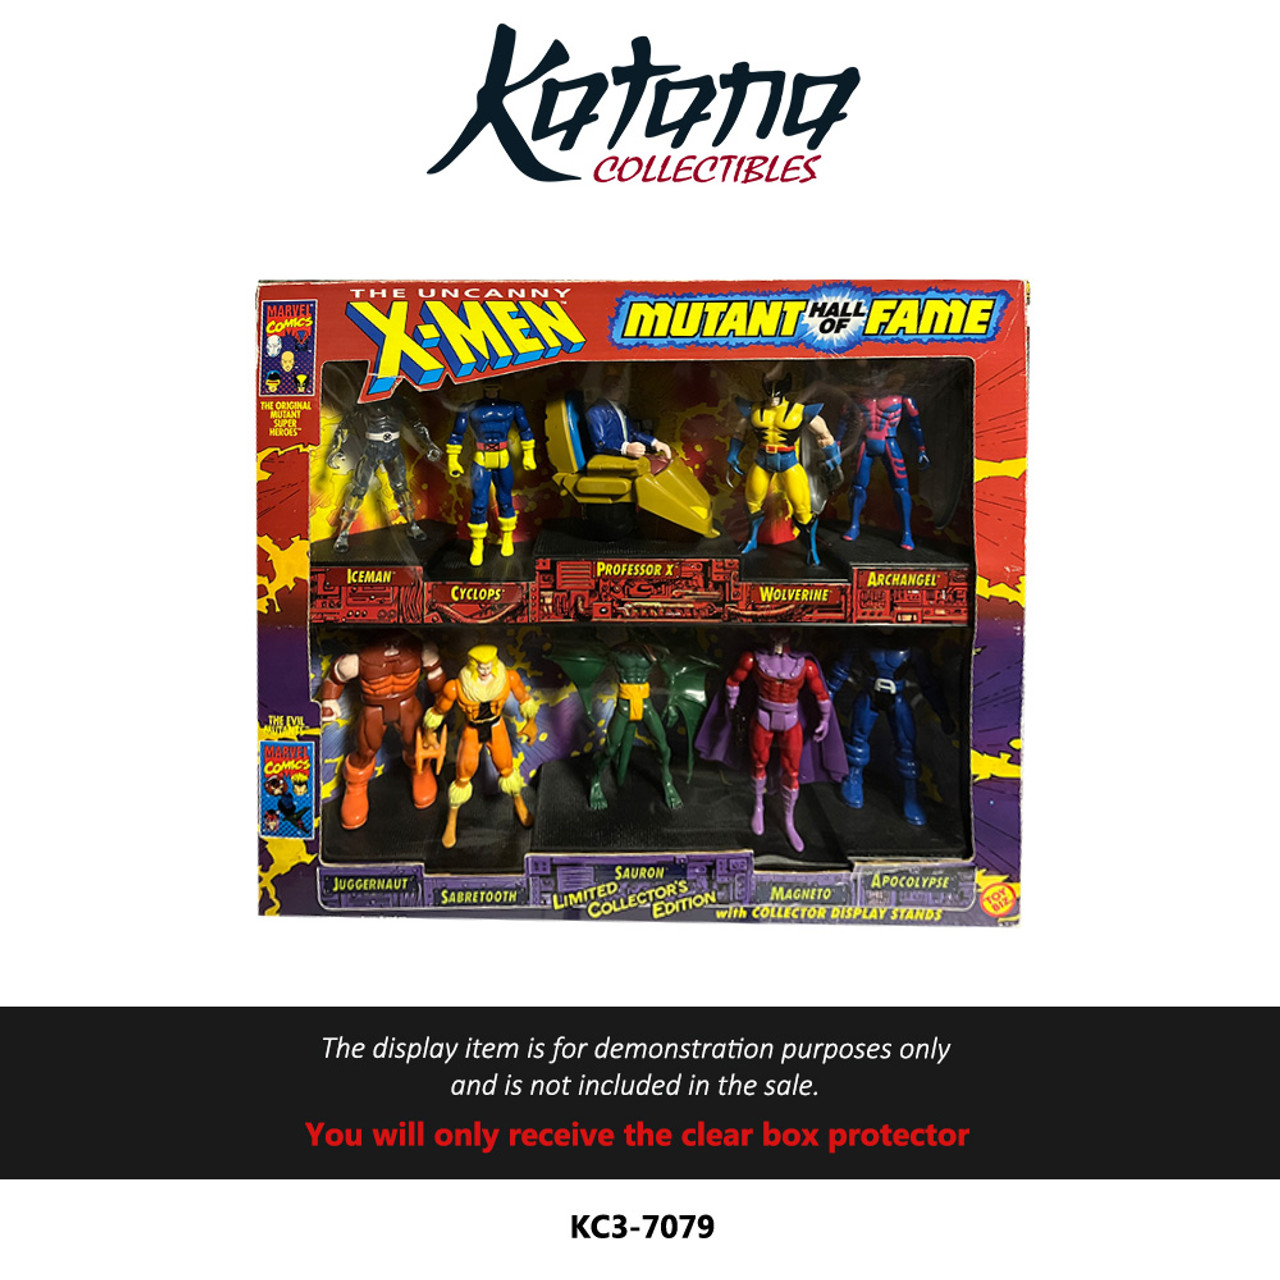 Katana Collectibles Protector For X-Men: Hall Of Fame (Toybiz)